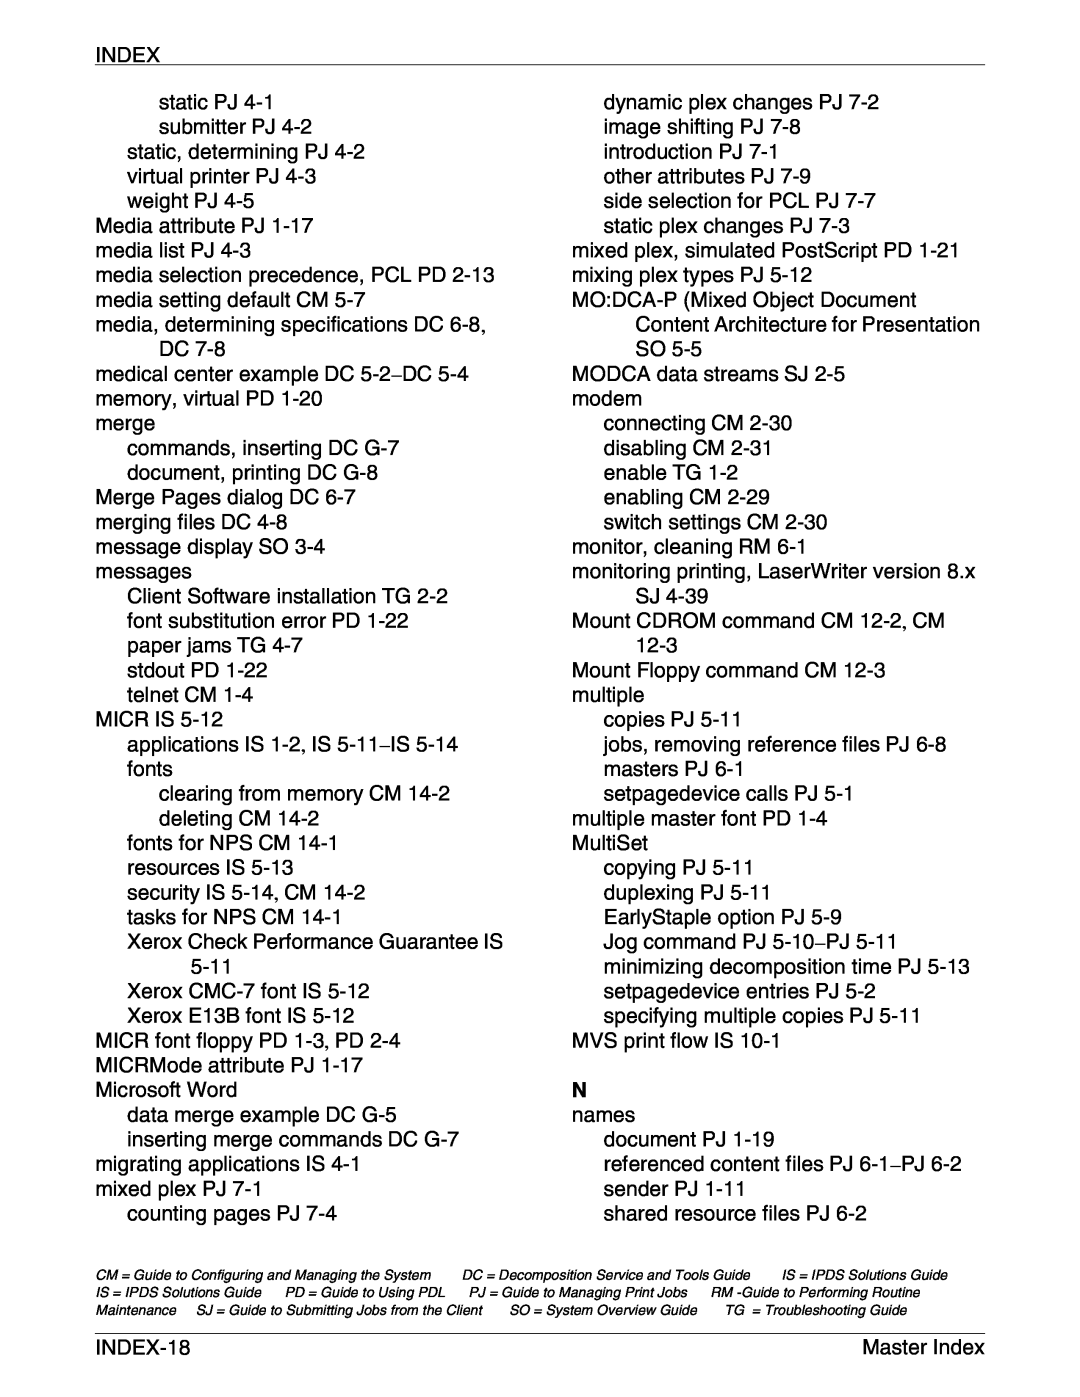 Xerox 4050/4090 NPS/NPS manual N names 